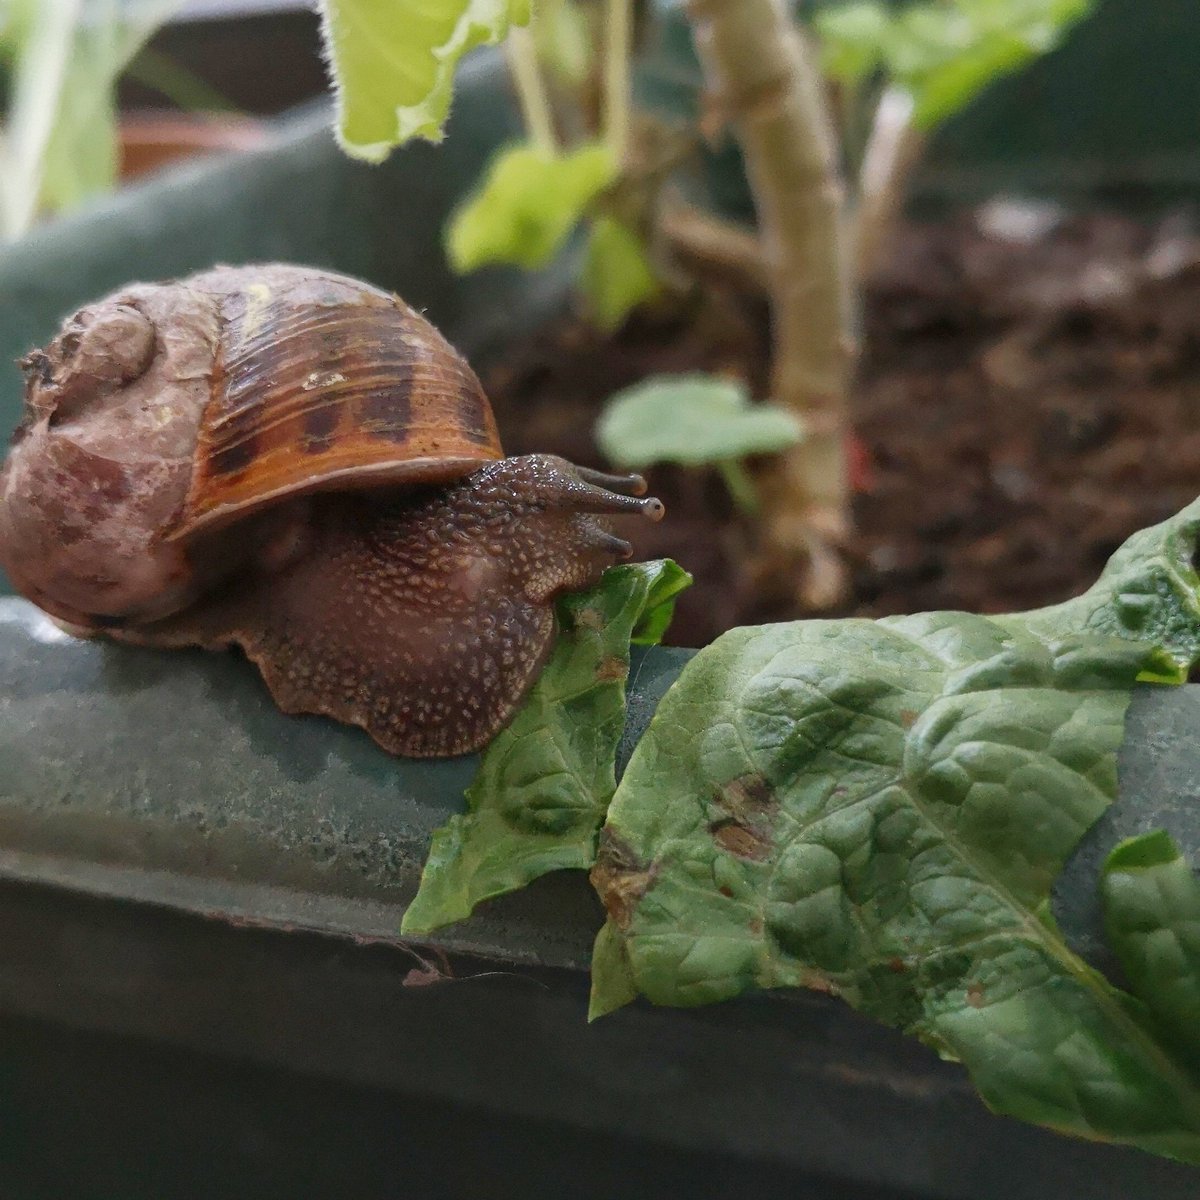 Snaily is eating the lettuce ☺️

#snail #snaily #eating #lettuce #gardening #cute #snails #roman #romansnail #snailsofinstagram #snaillife #snailshell #snailphotography